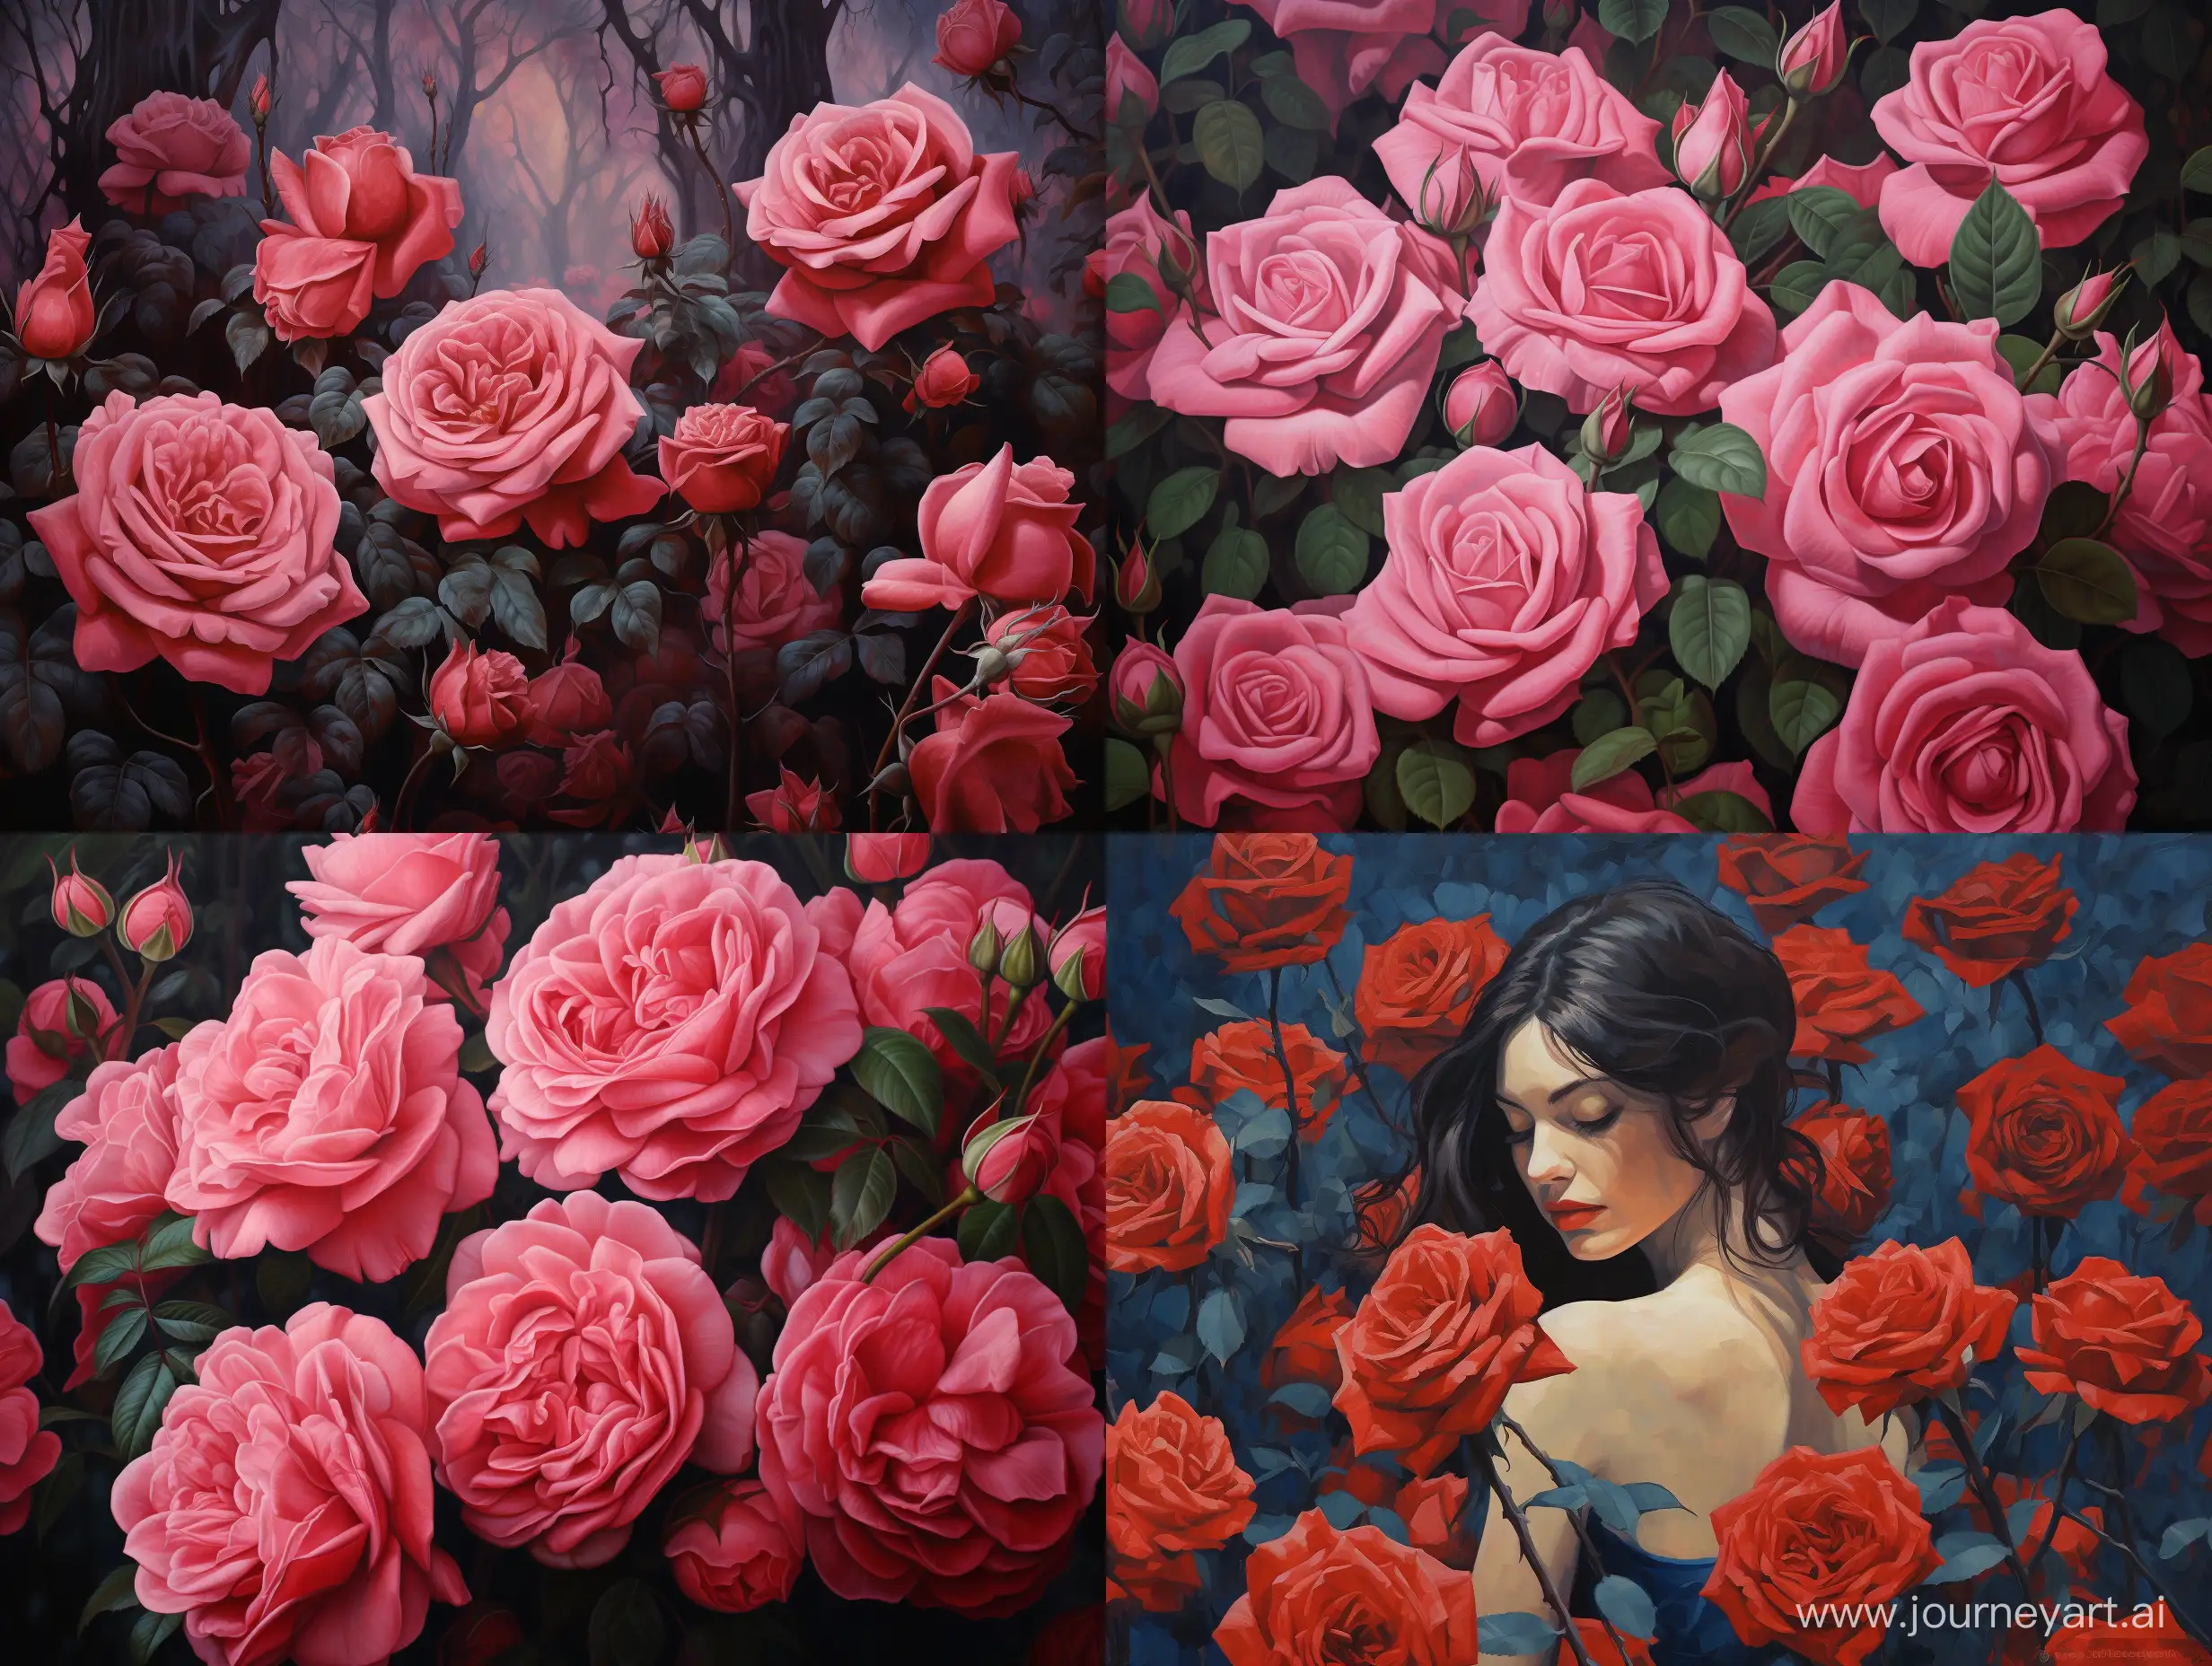 Desperate-Roses-Art-Surrealistic-Composition-in-43-Aspect-Ratio